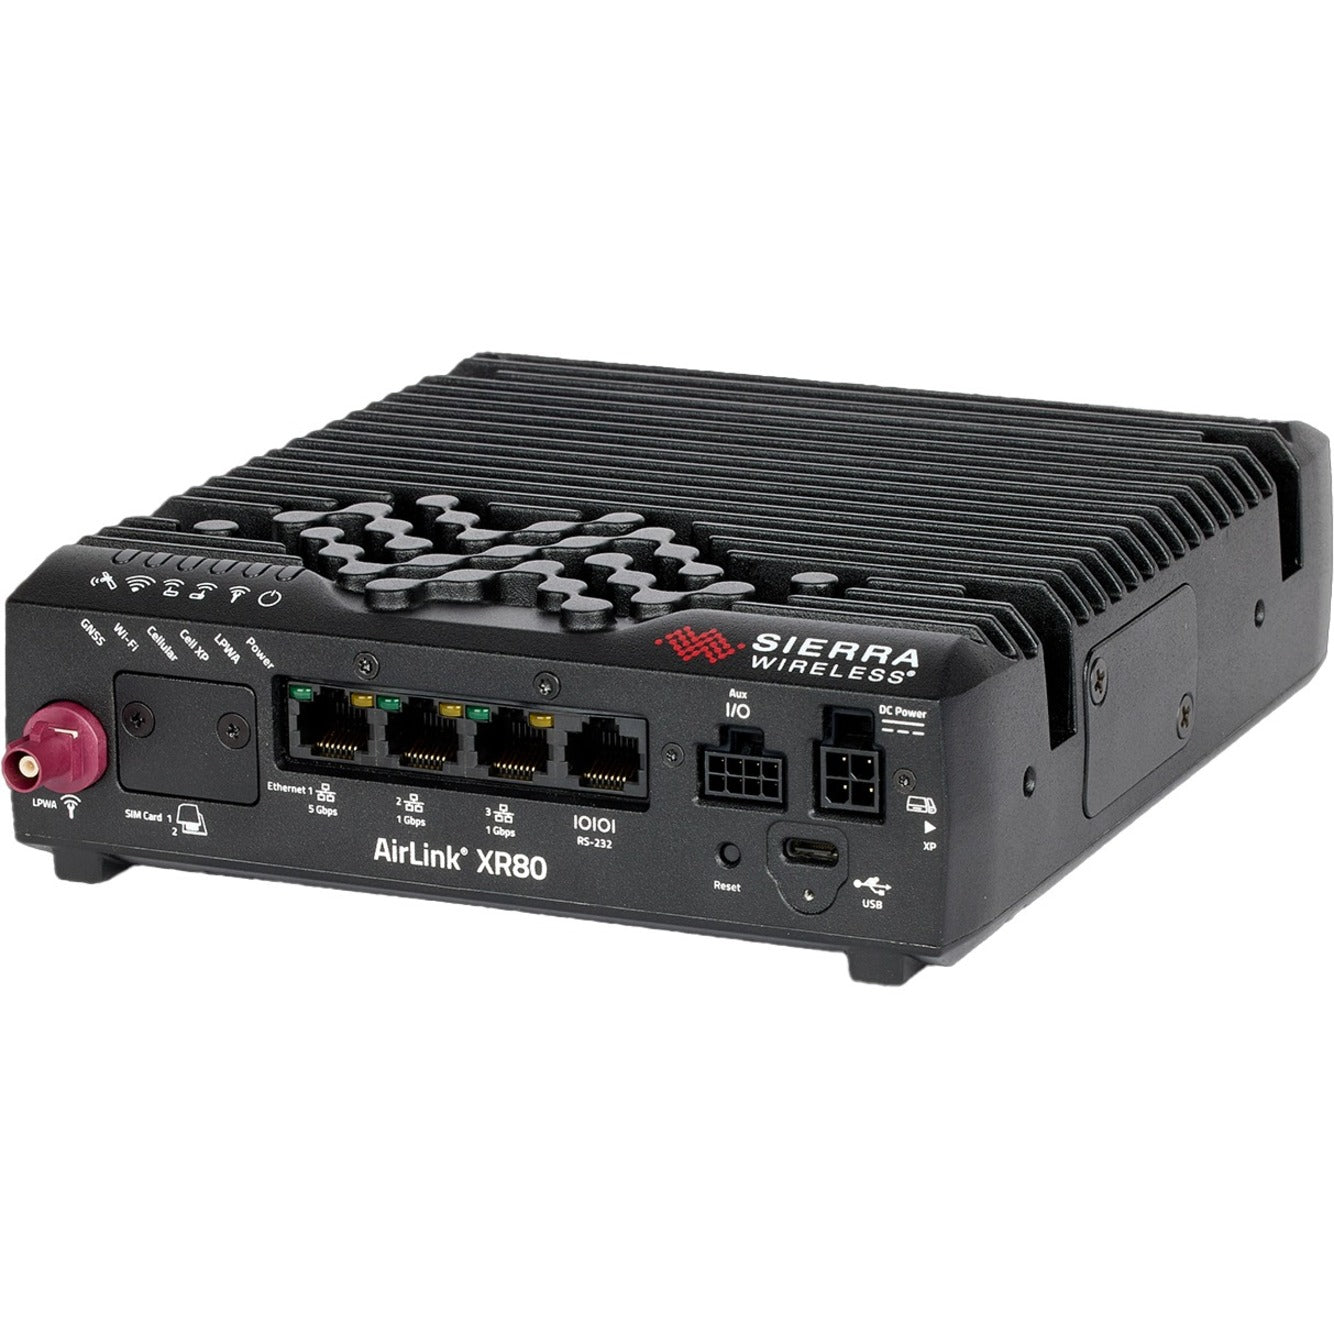 Sierra Wireless 1104793 AirLink XR80 Modem/Wireless Router, 5G LTE HSDPA+ Ethernet, 2 SIM Card Supported, 5 Gigabit Ethernet, VPN Supported